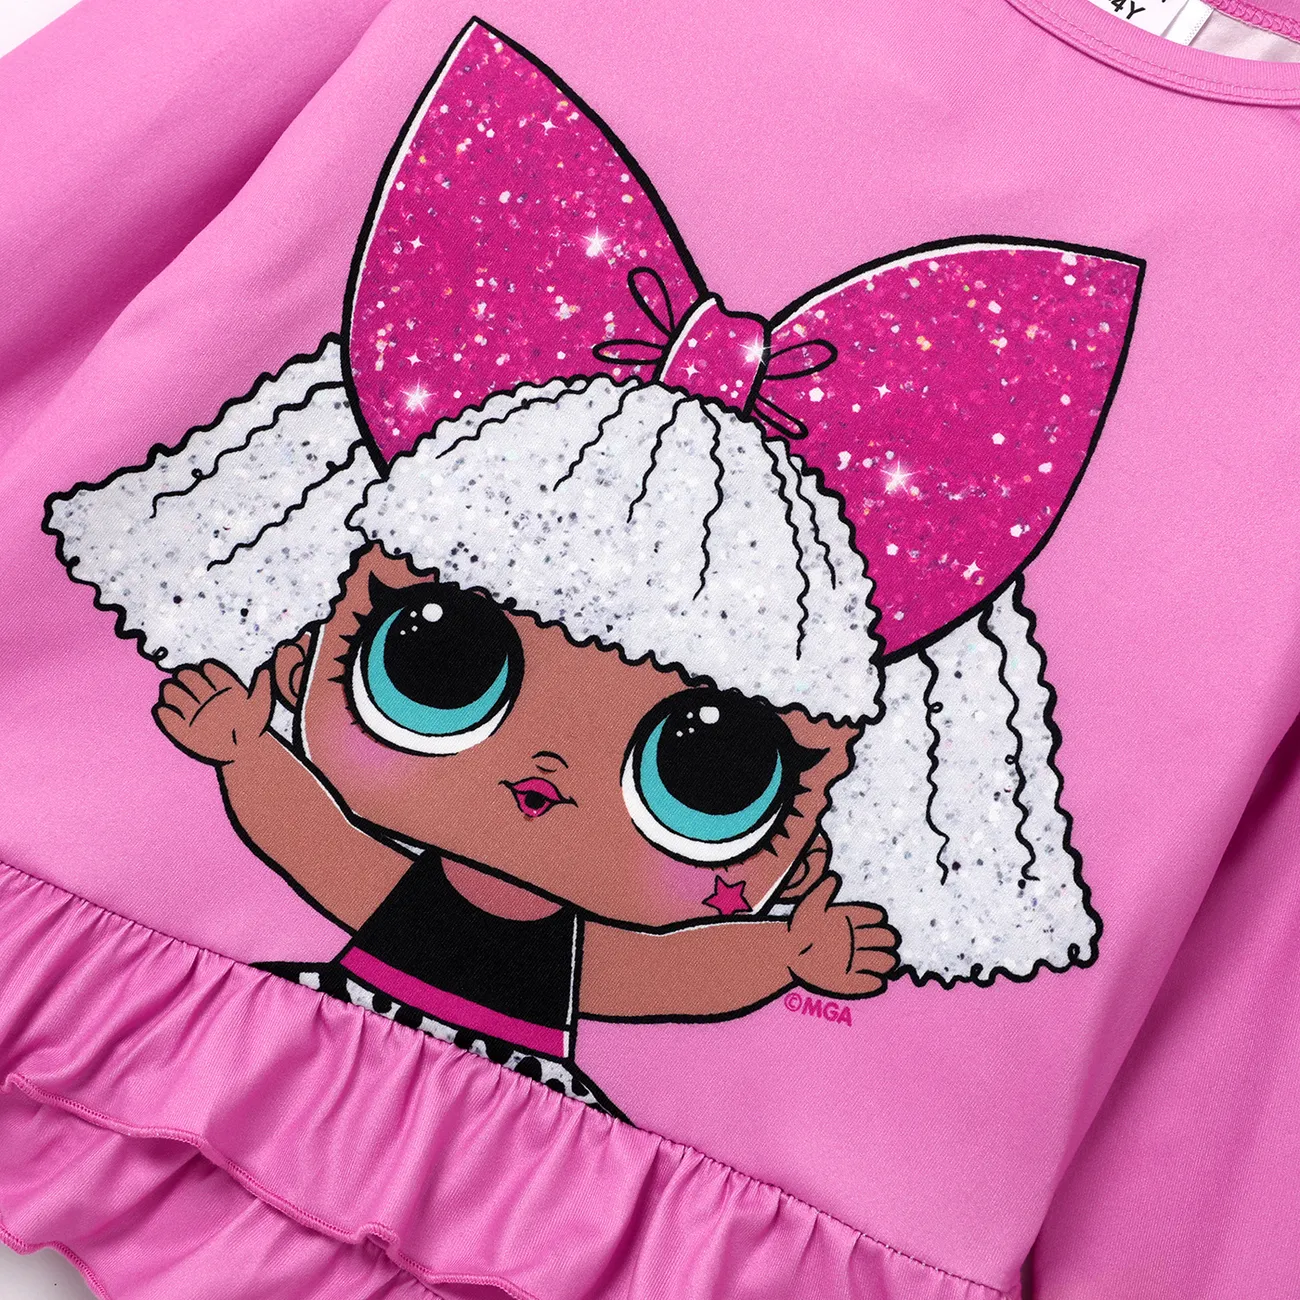 L.O.L. SURPRISE! 2pcs Toddler Girl Character Print Tee and Polka Dots Leggings Set Pink big image 1